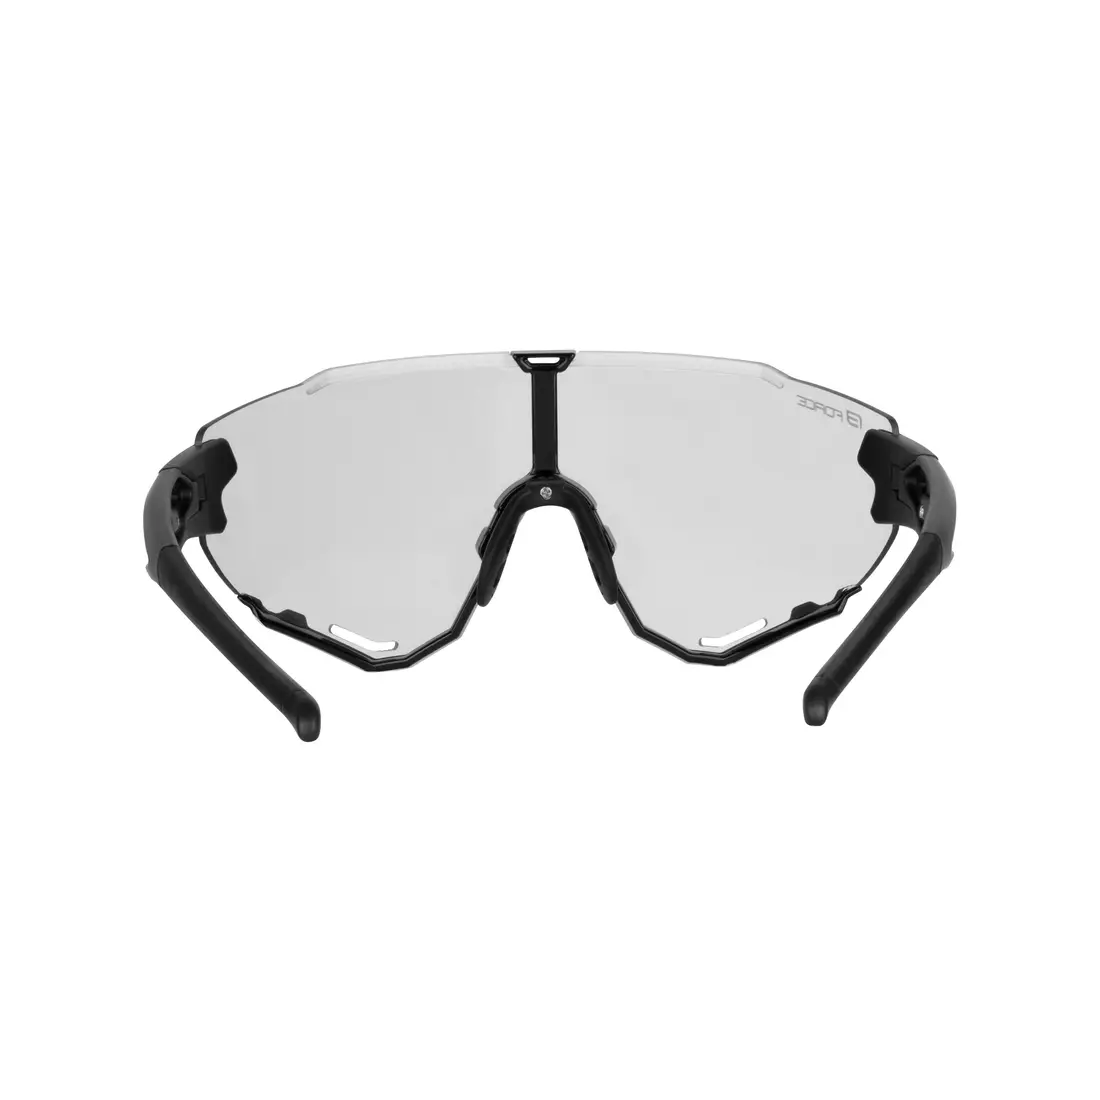 FORCE photochromic sports glasses CREED black 91185